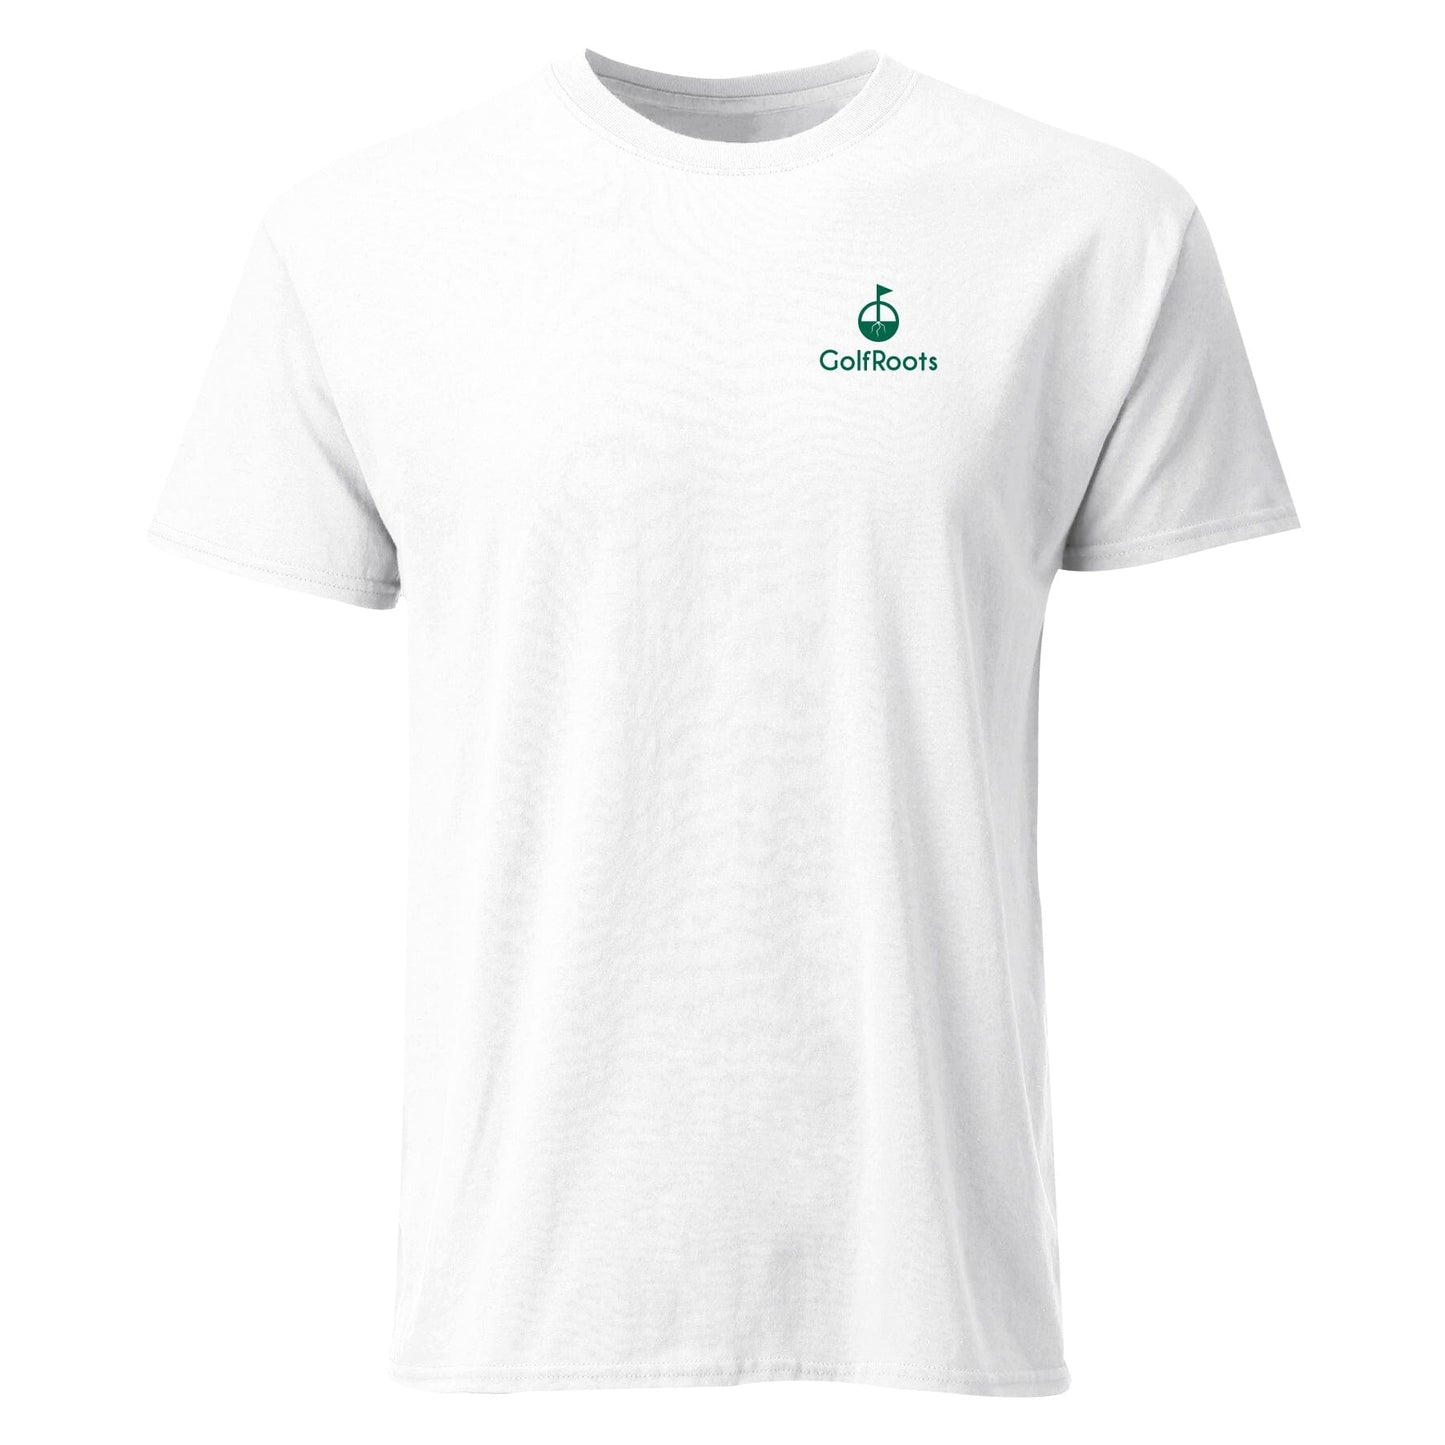 GolfRoots Cotton T-Shirt